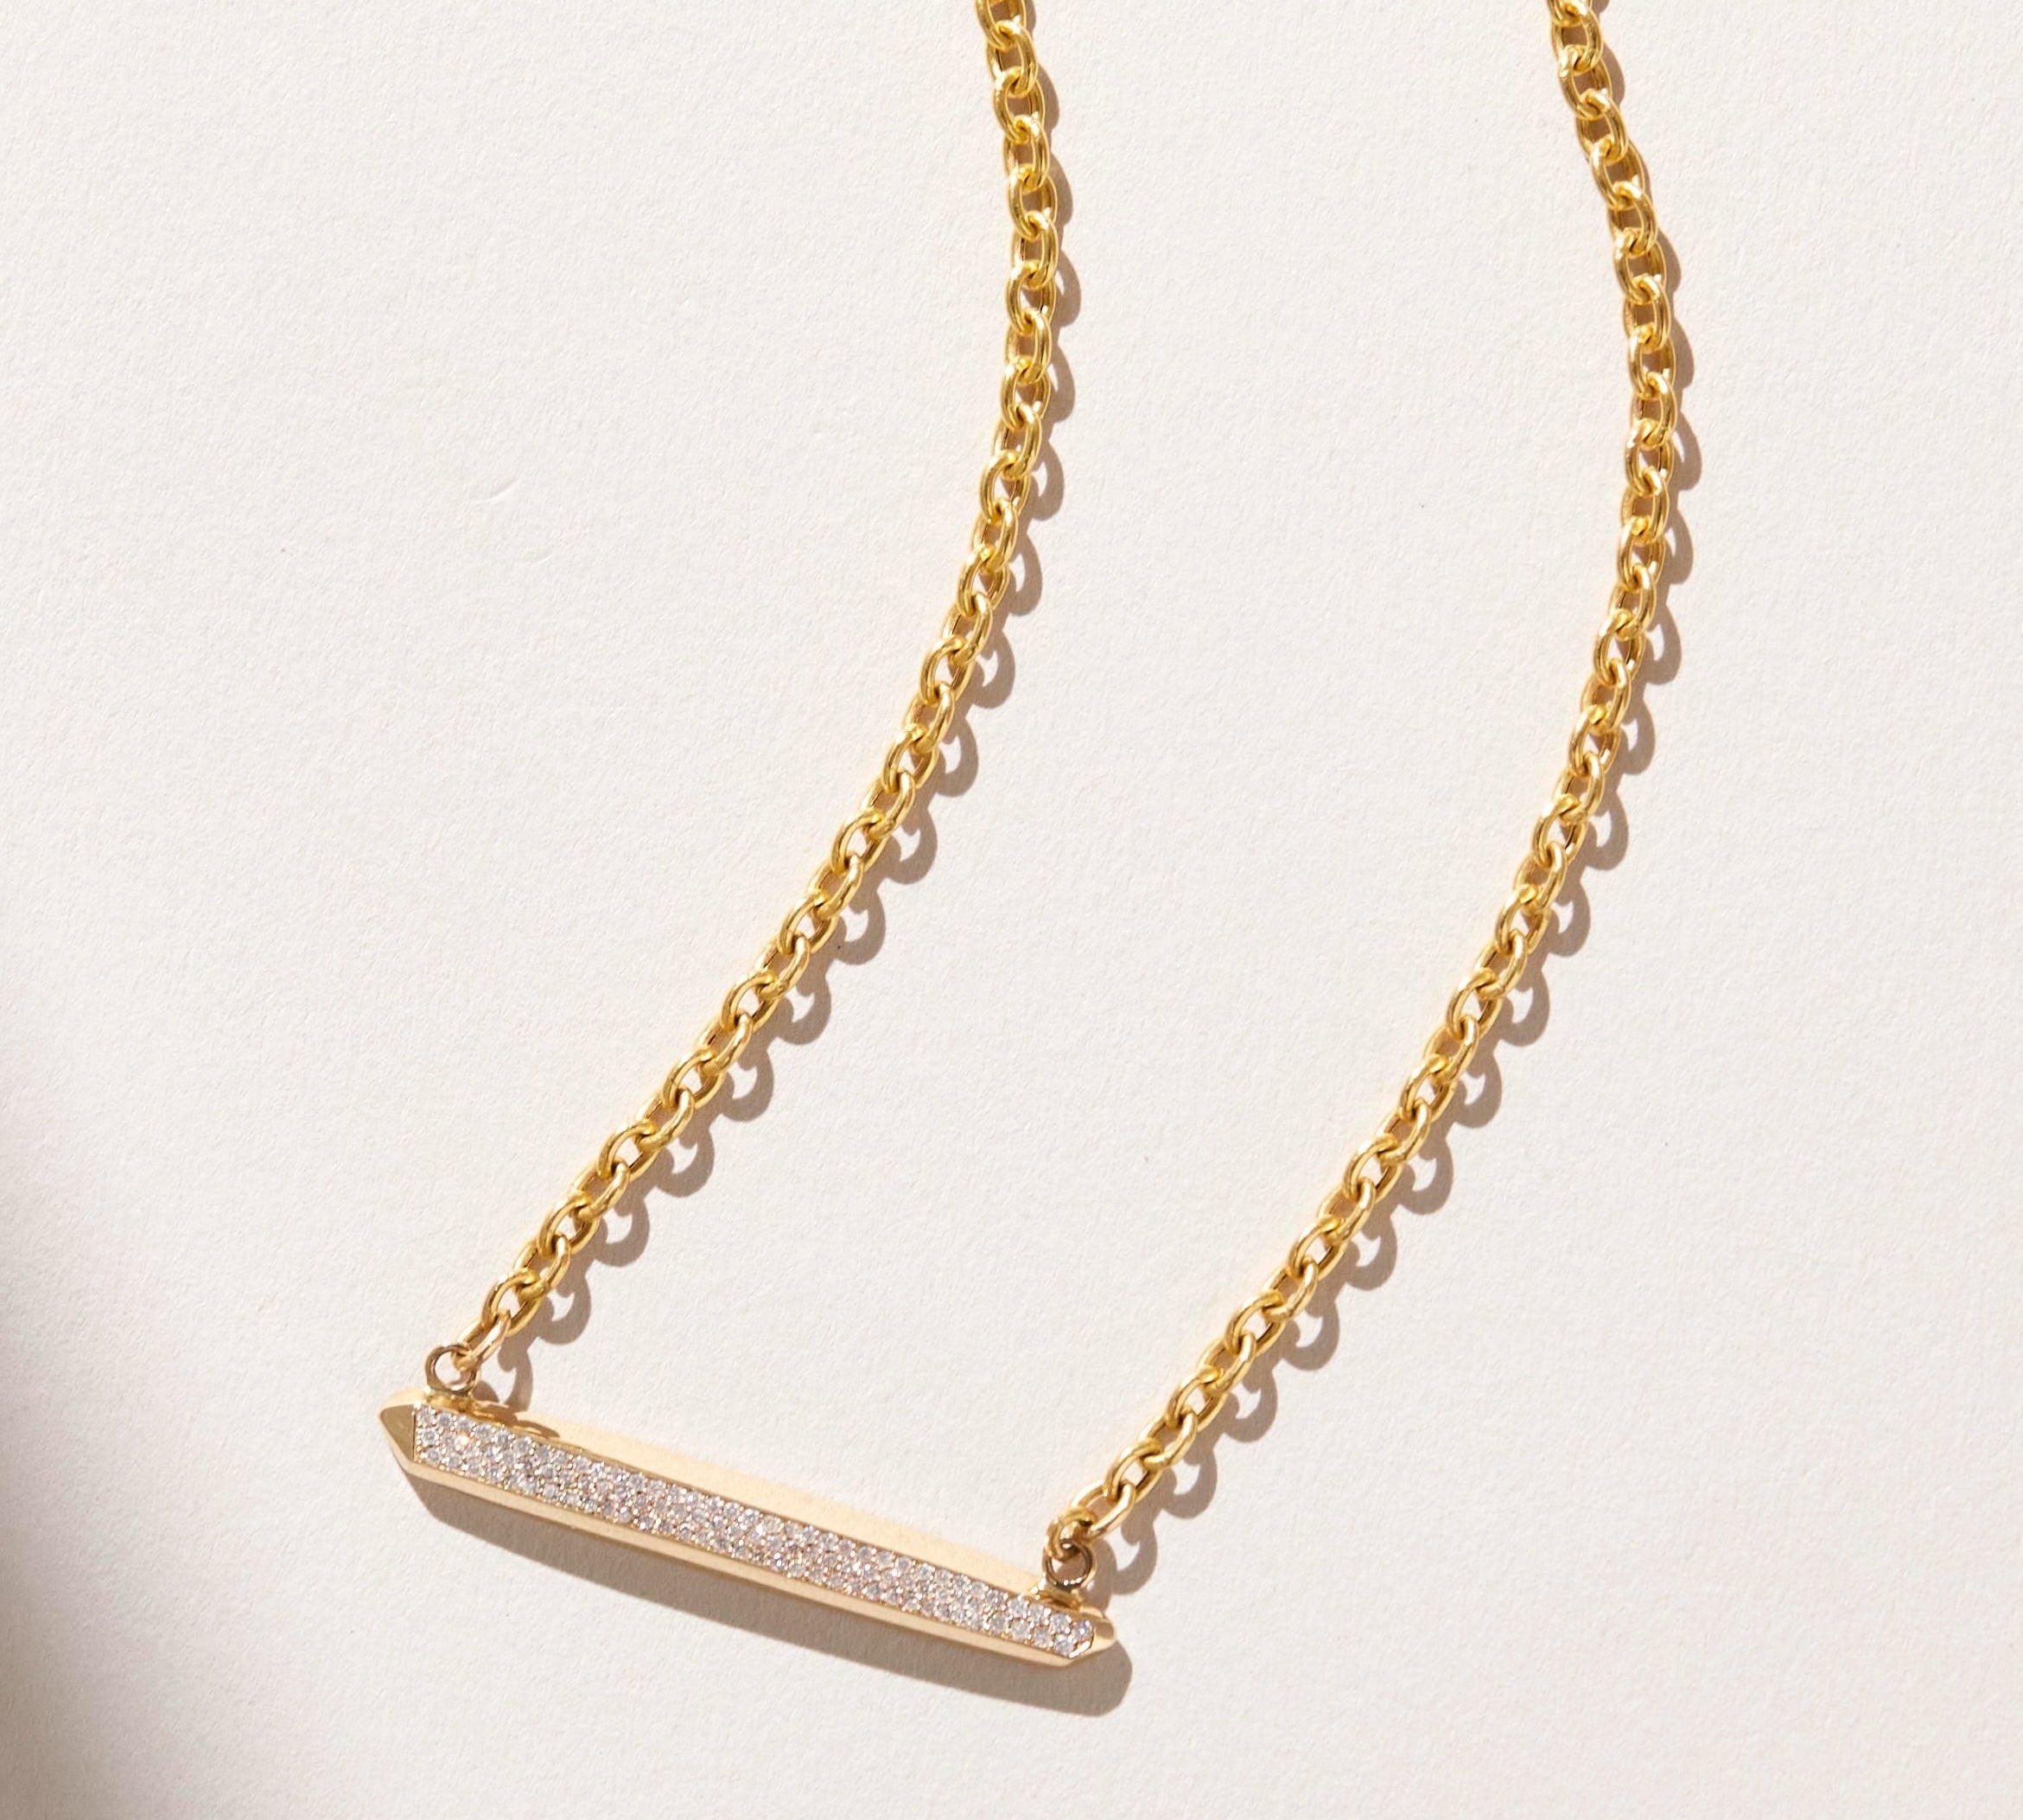 Crystalline Necklace Pendant Elisabeth Bell Jewelry   